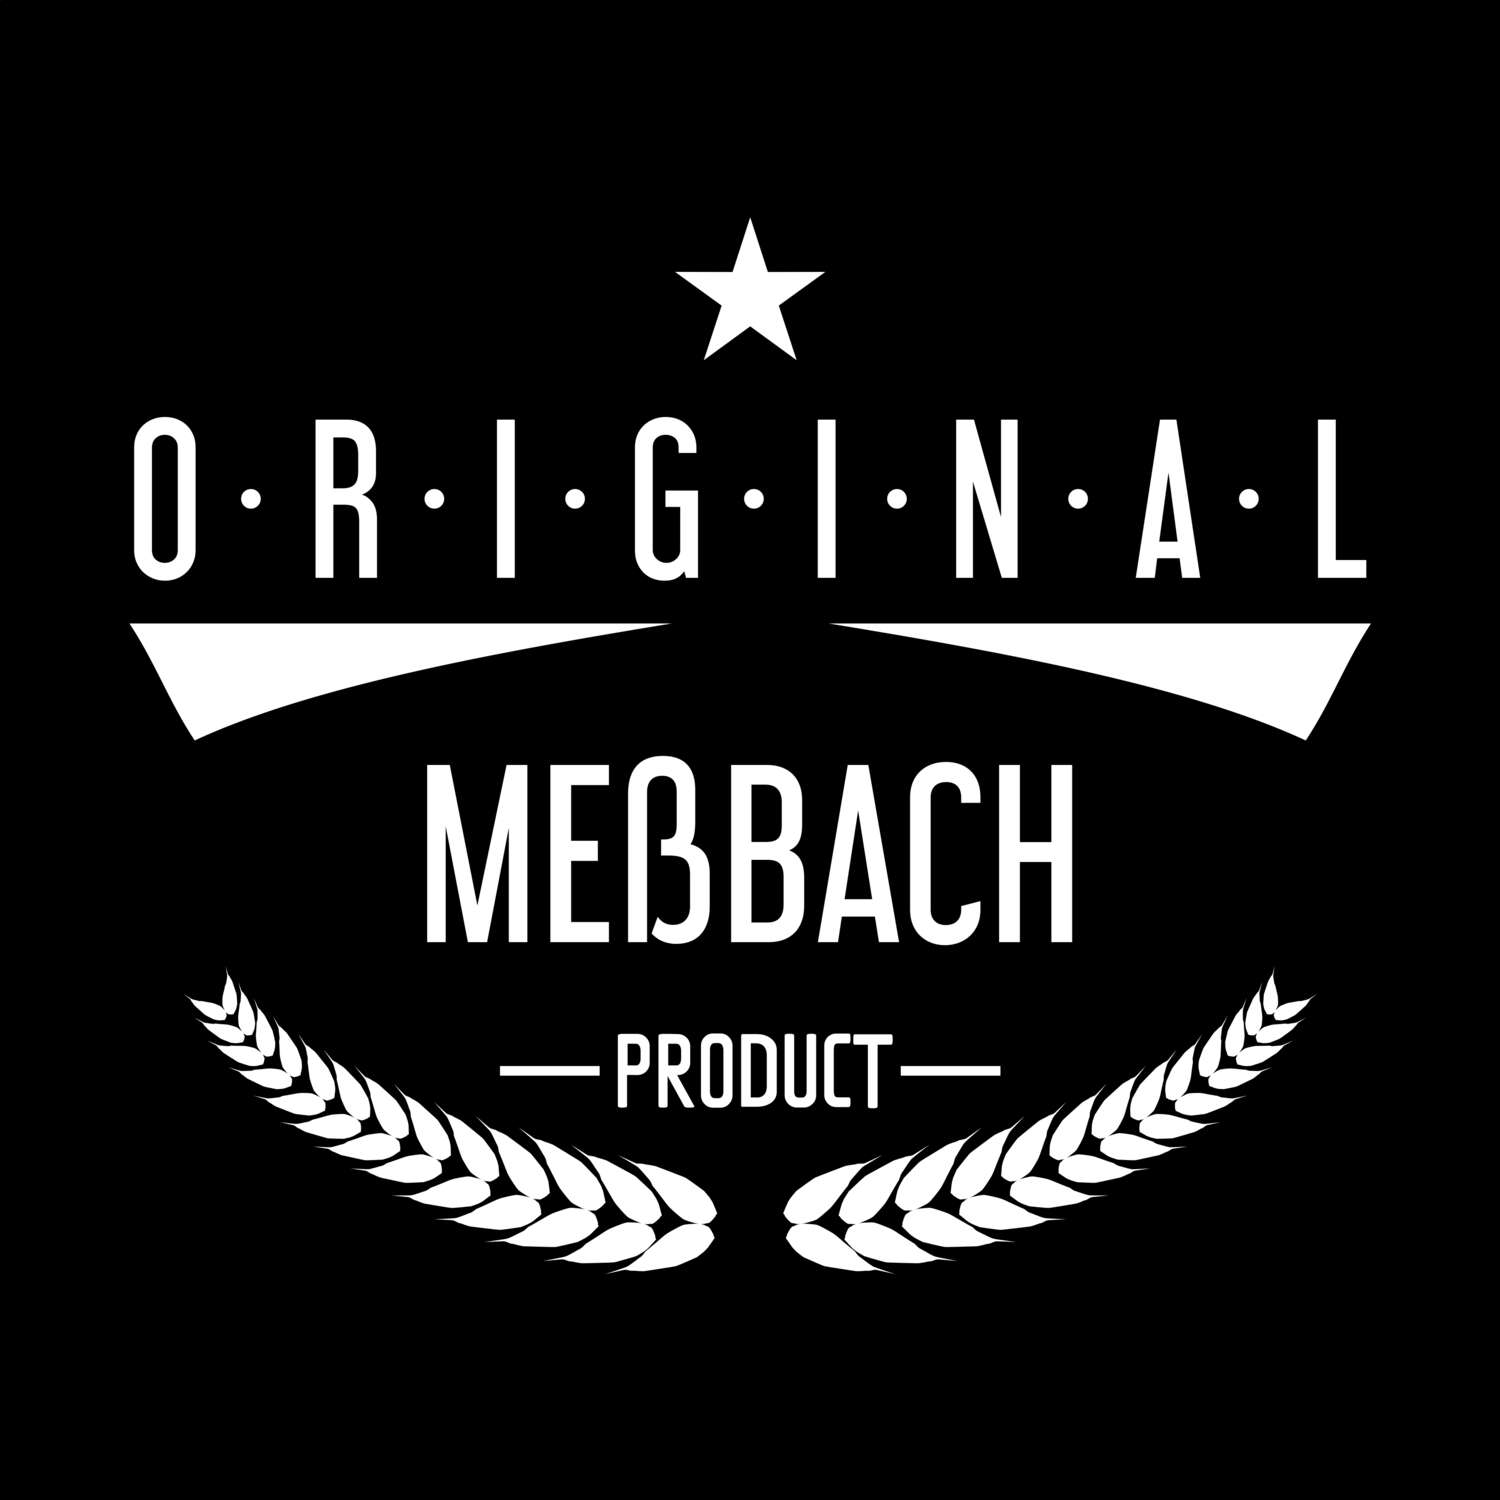 Meßbach T-Shirt »Original Product«